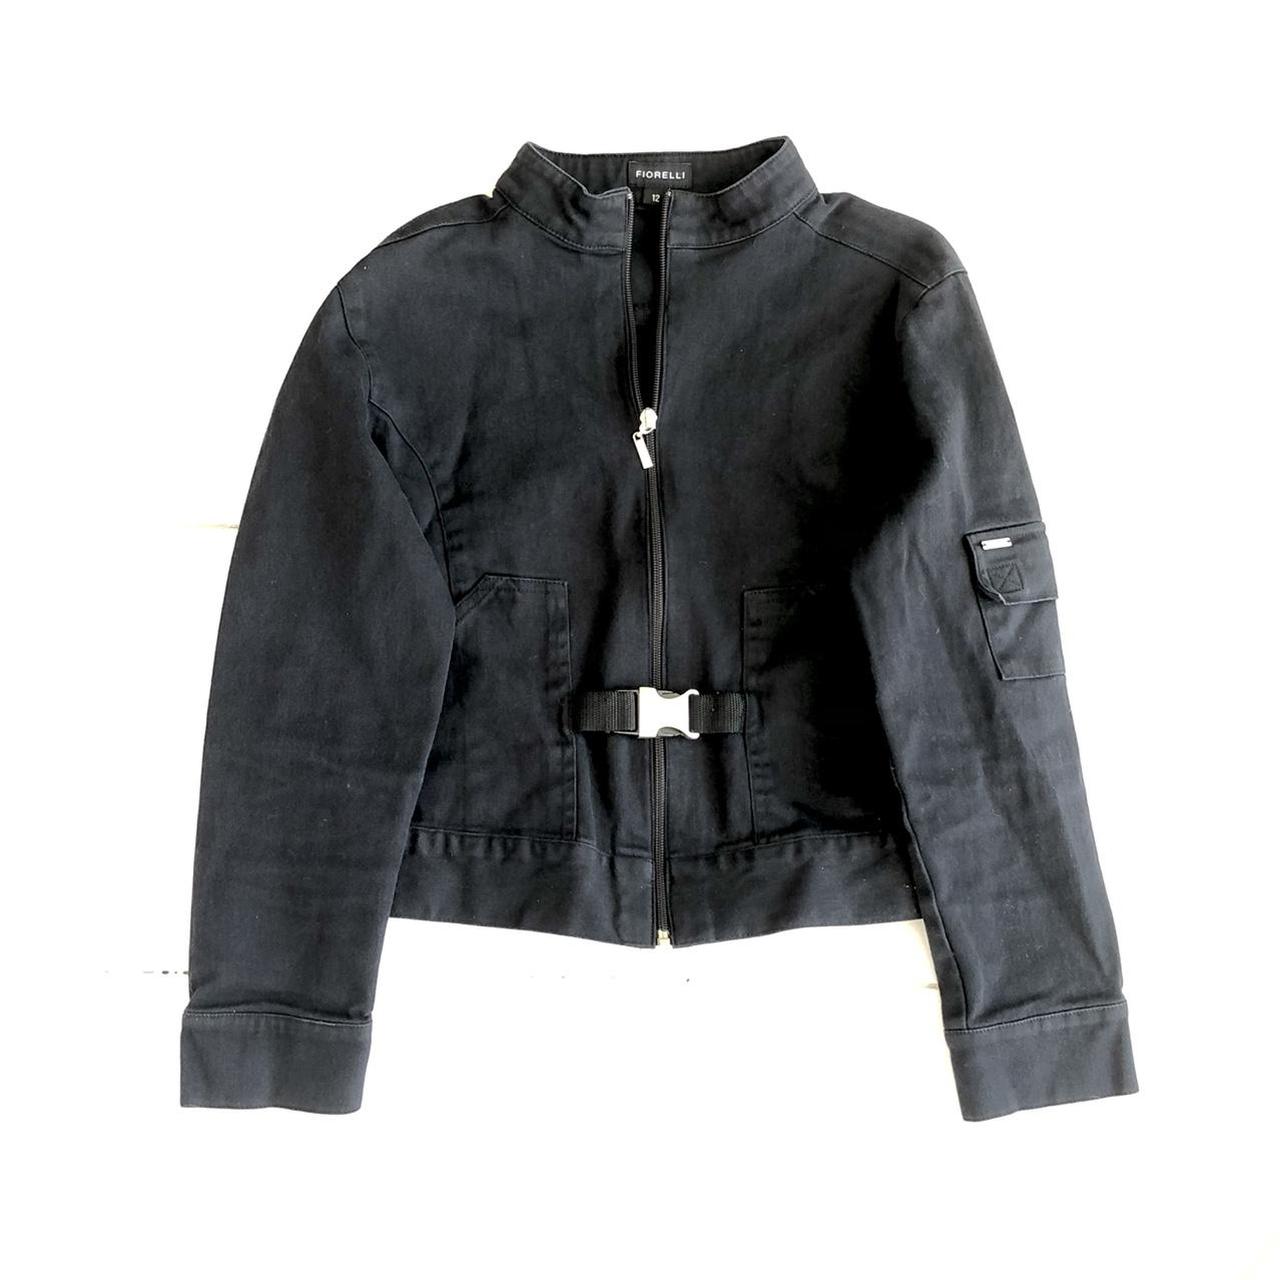 Fiorelli jacket Insane black cotton boxy short... - Depop